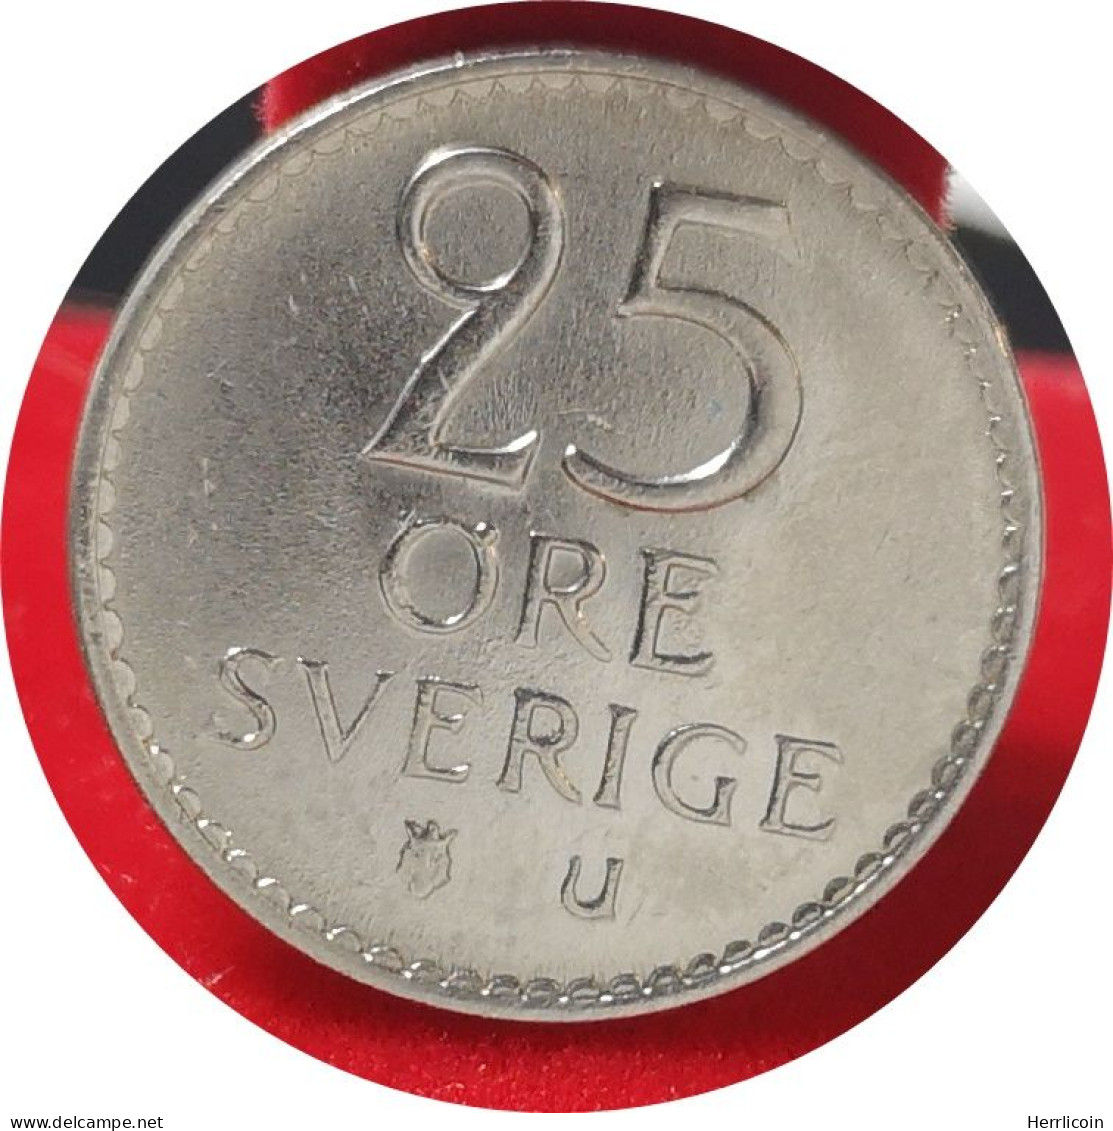 Monnaie Suède - 1963 - 25 öre Gustaf VI Adolf - Suède